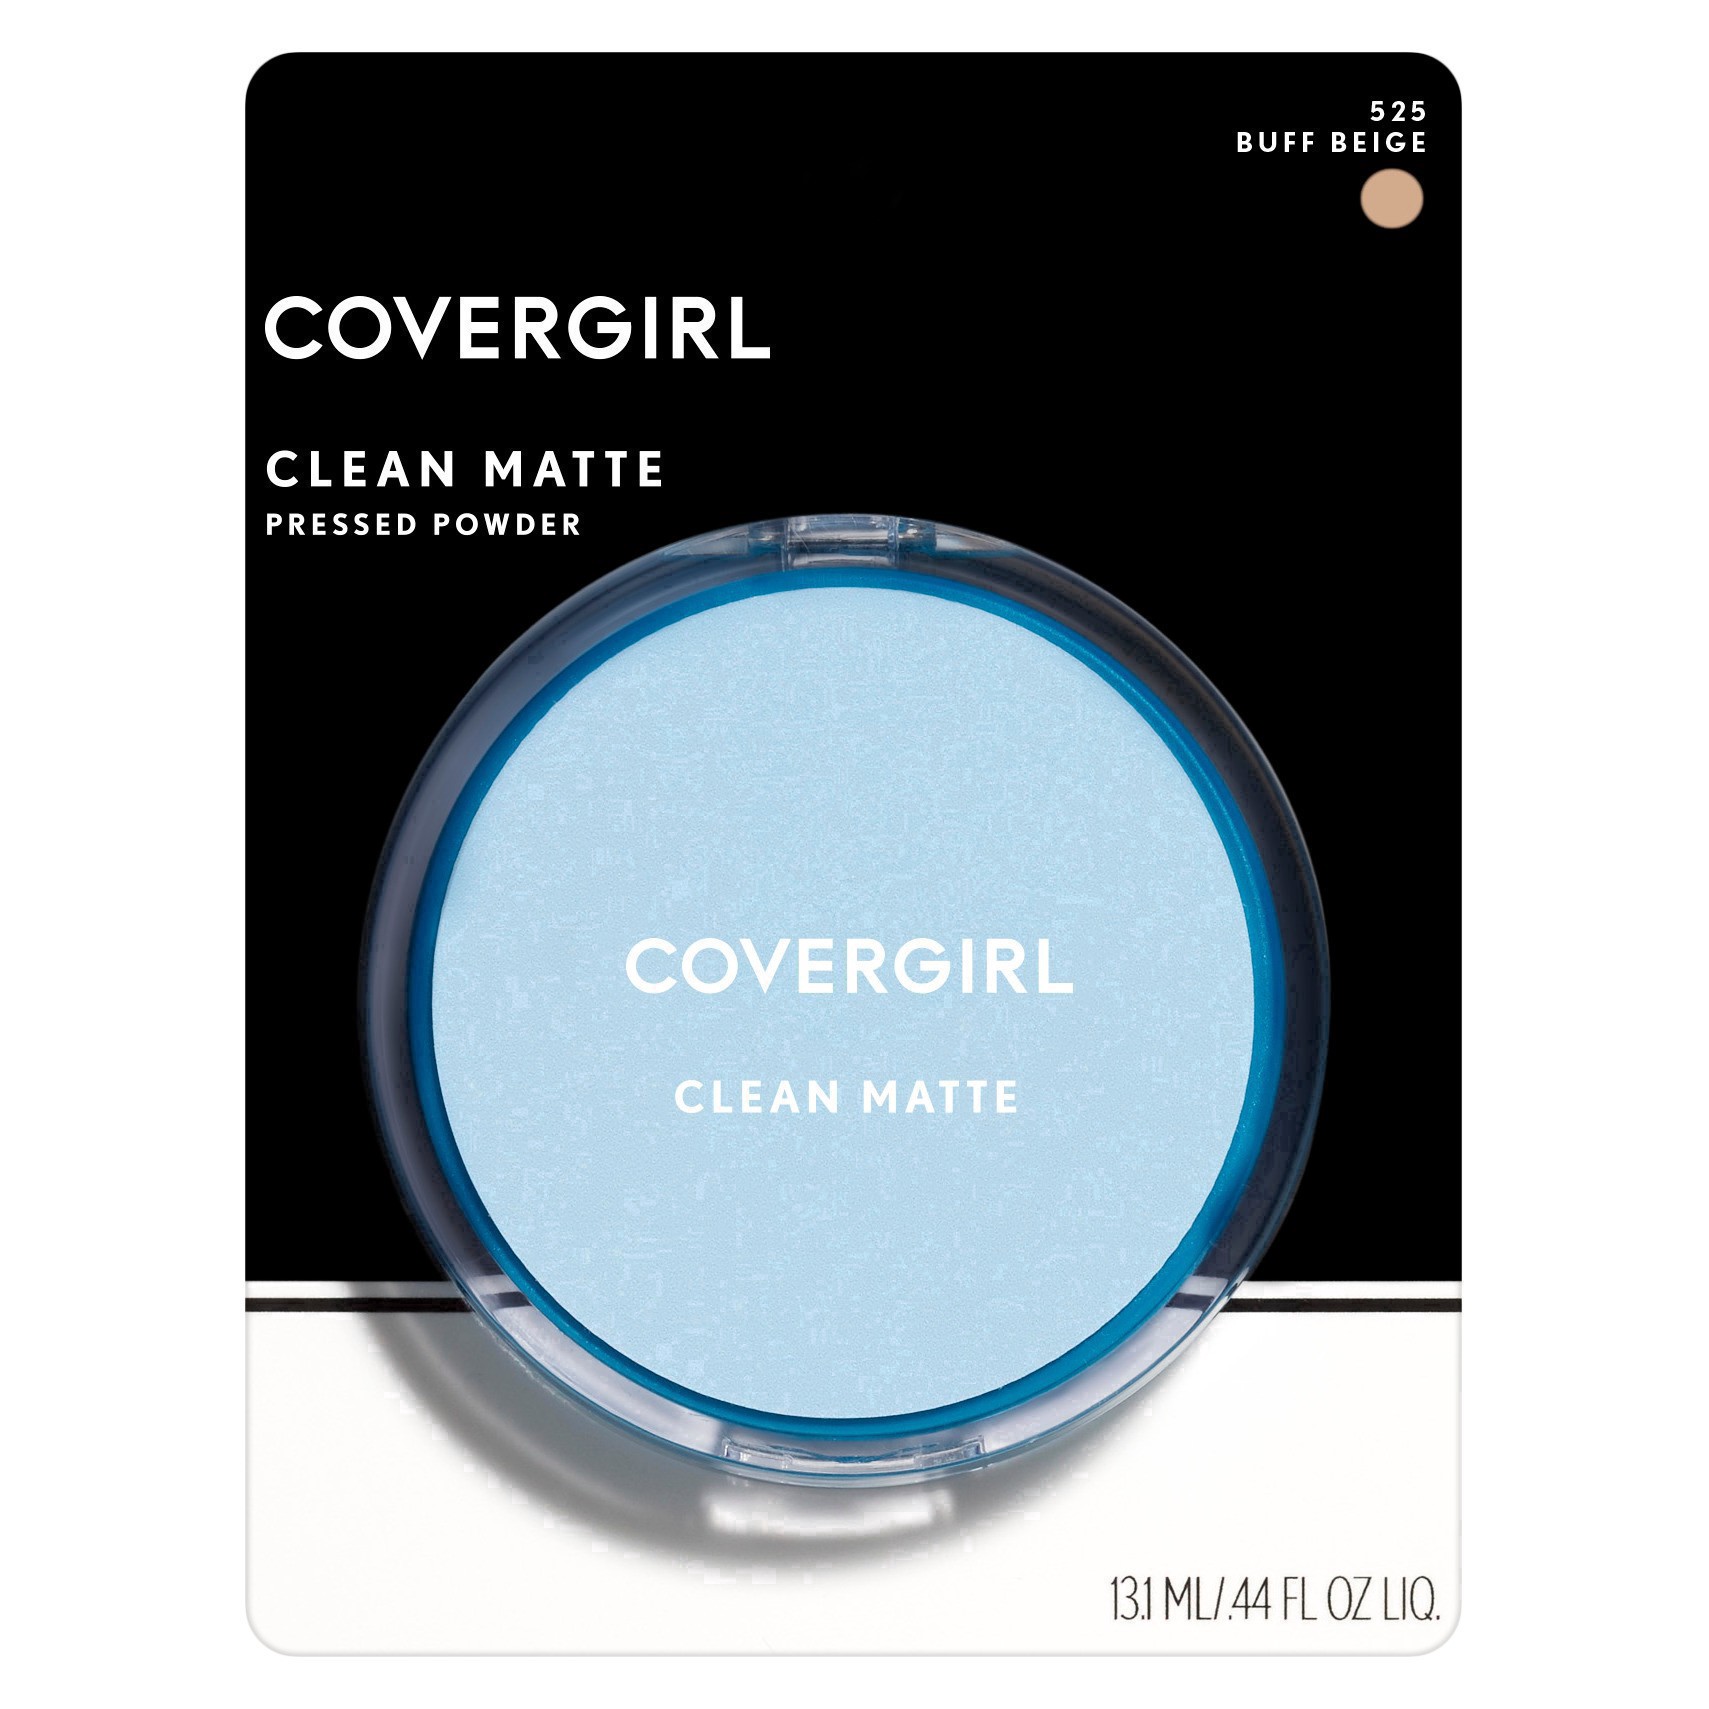 slide 24 of 39, Covergirl COVERGIRL Clean Matte Pressed Powder Buff Beige 525, 10 G 0.35 OZ, 10 g